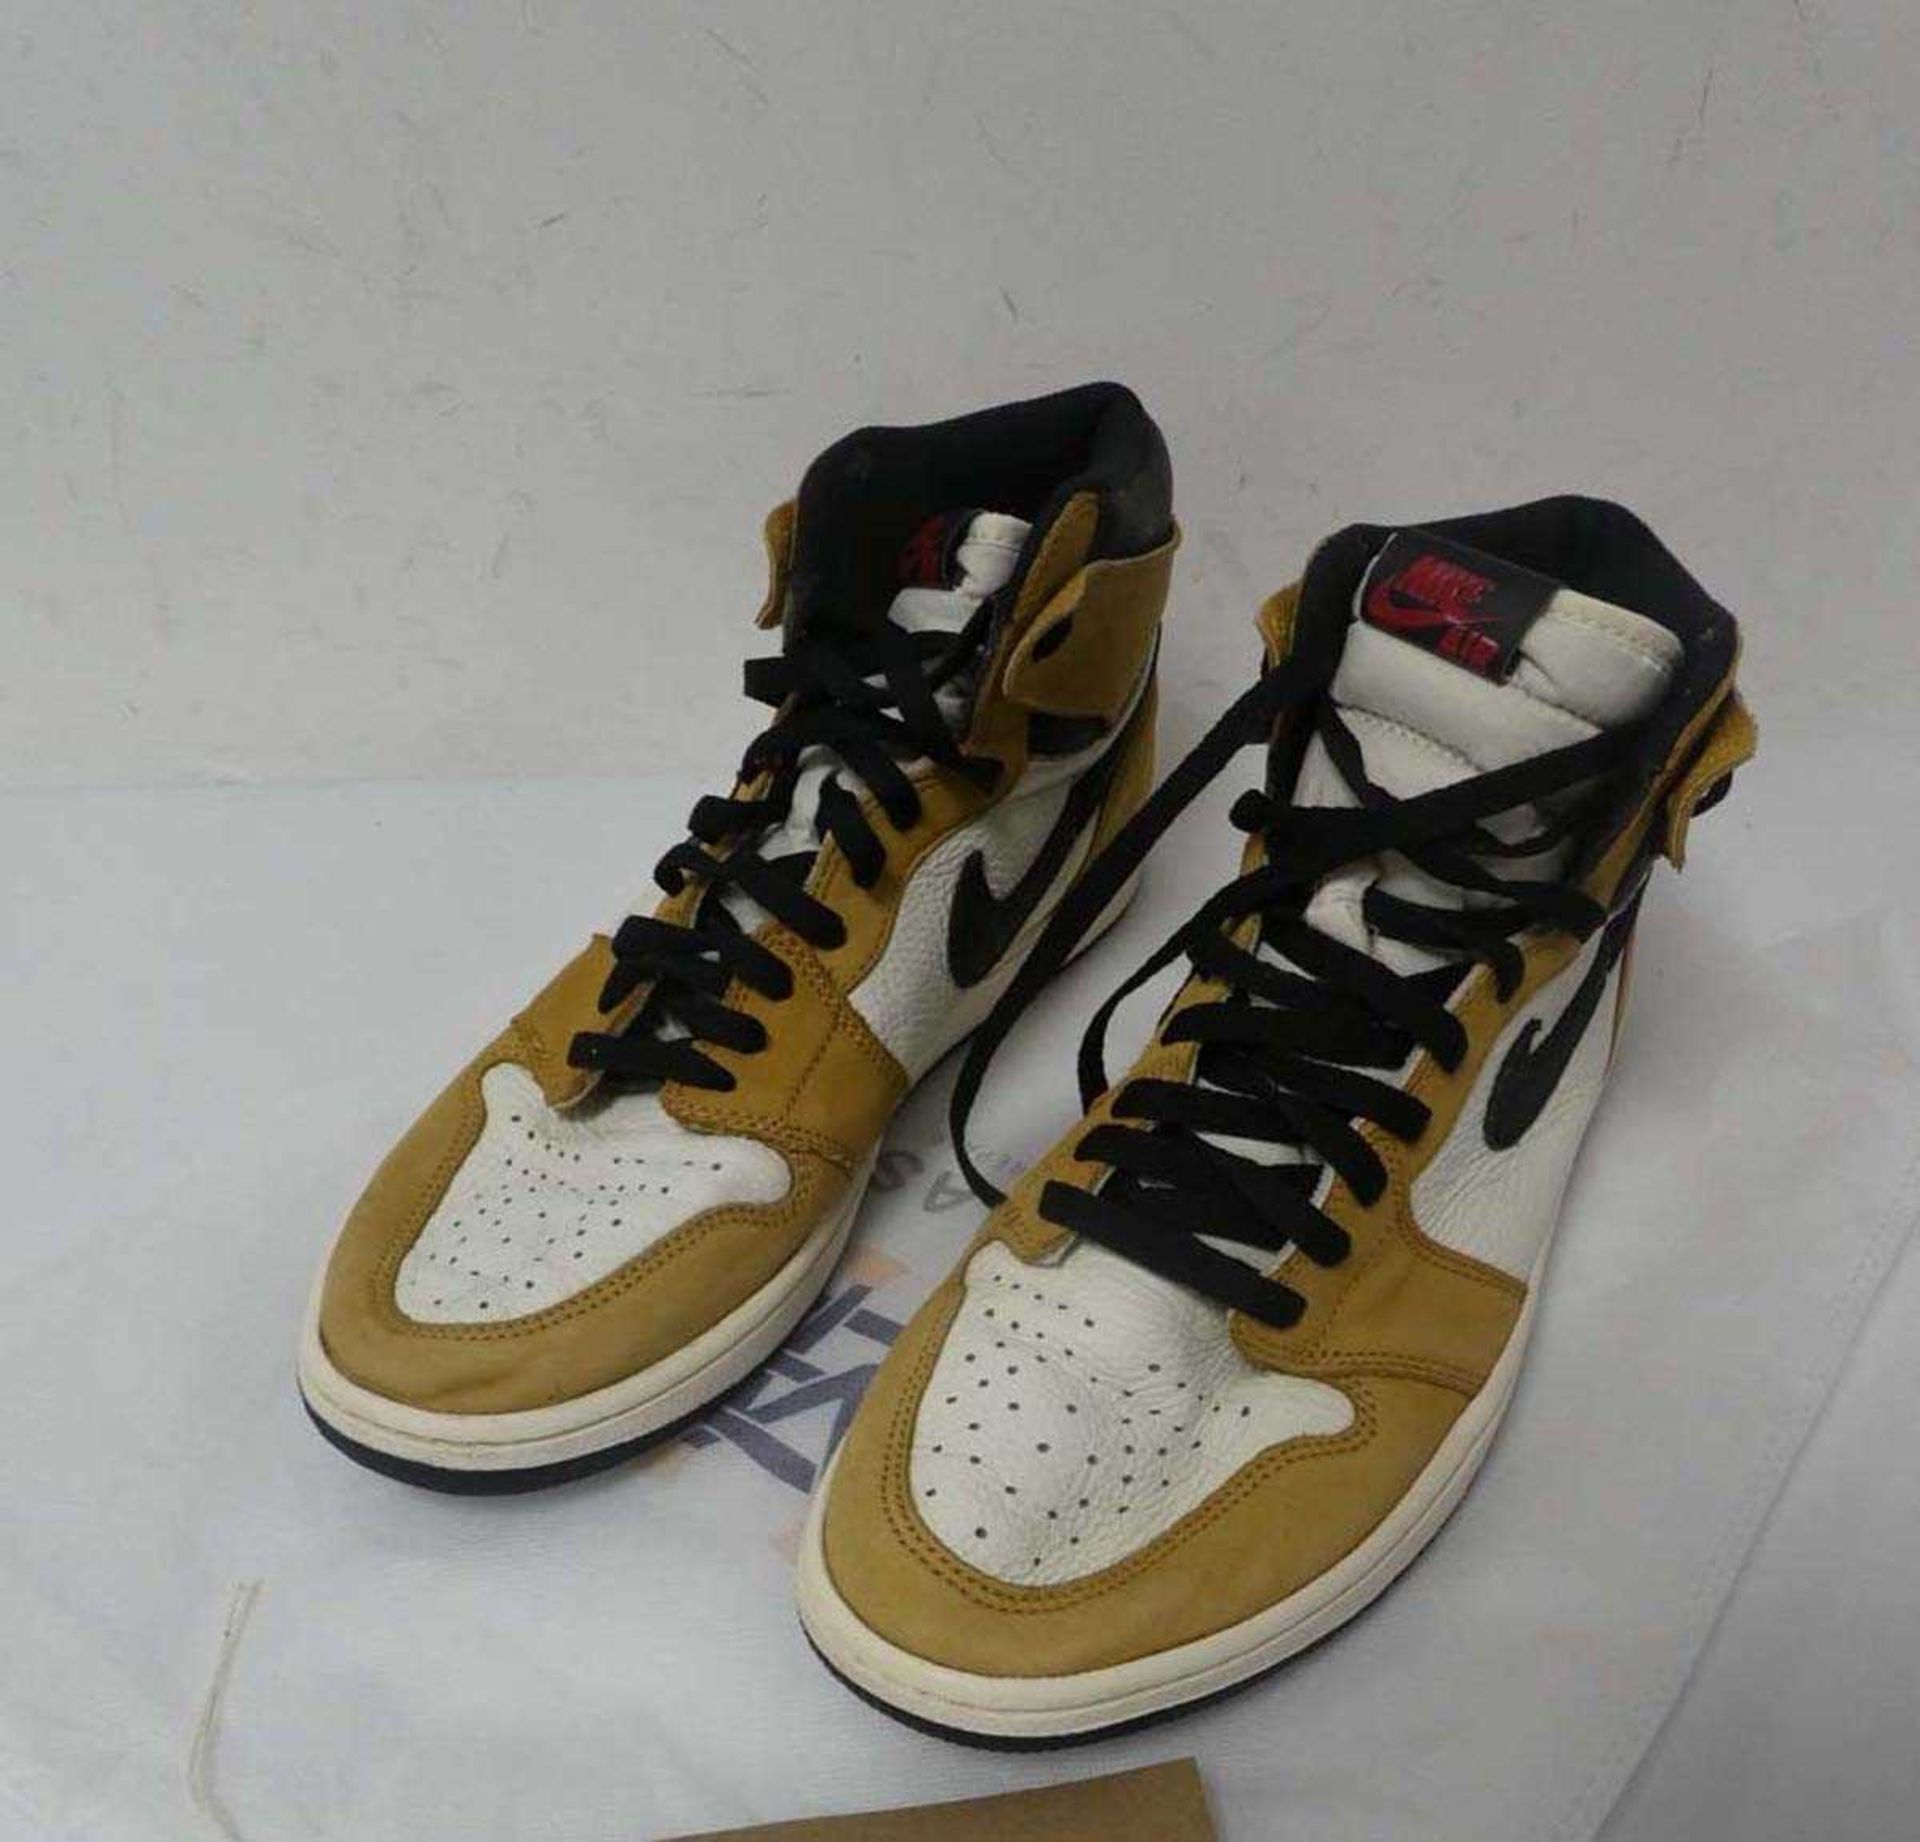 +VAT 1 x Nike Air Jordan, brown and white, signs of wear, UK 11